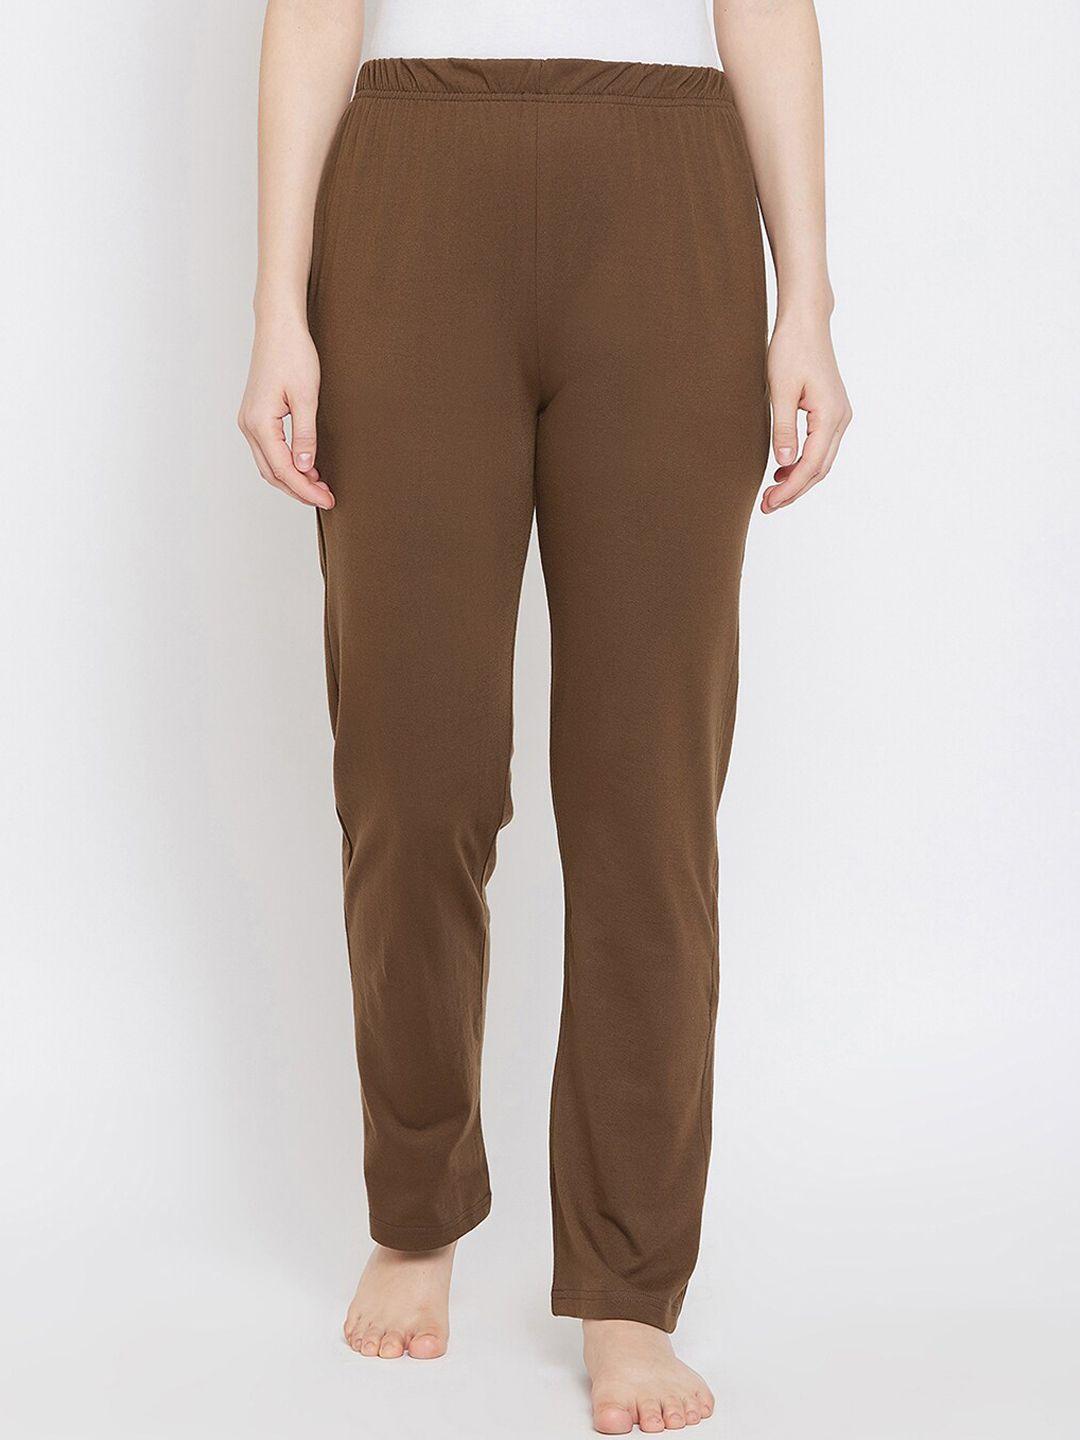 clovia women brown solid lounge pants